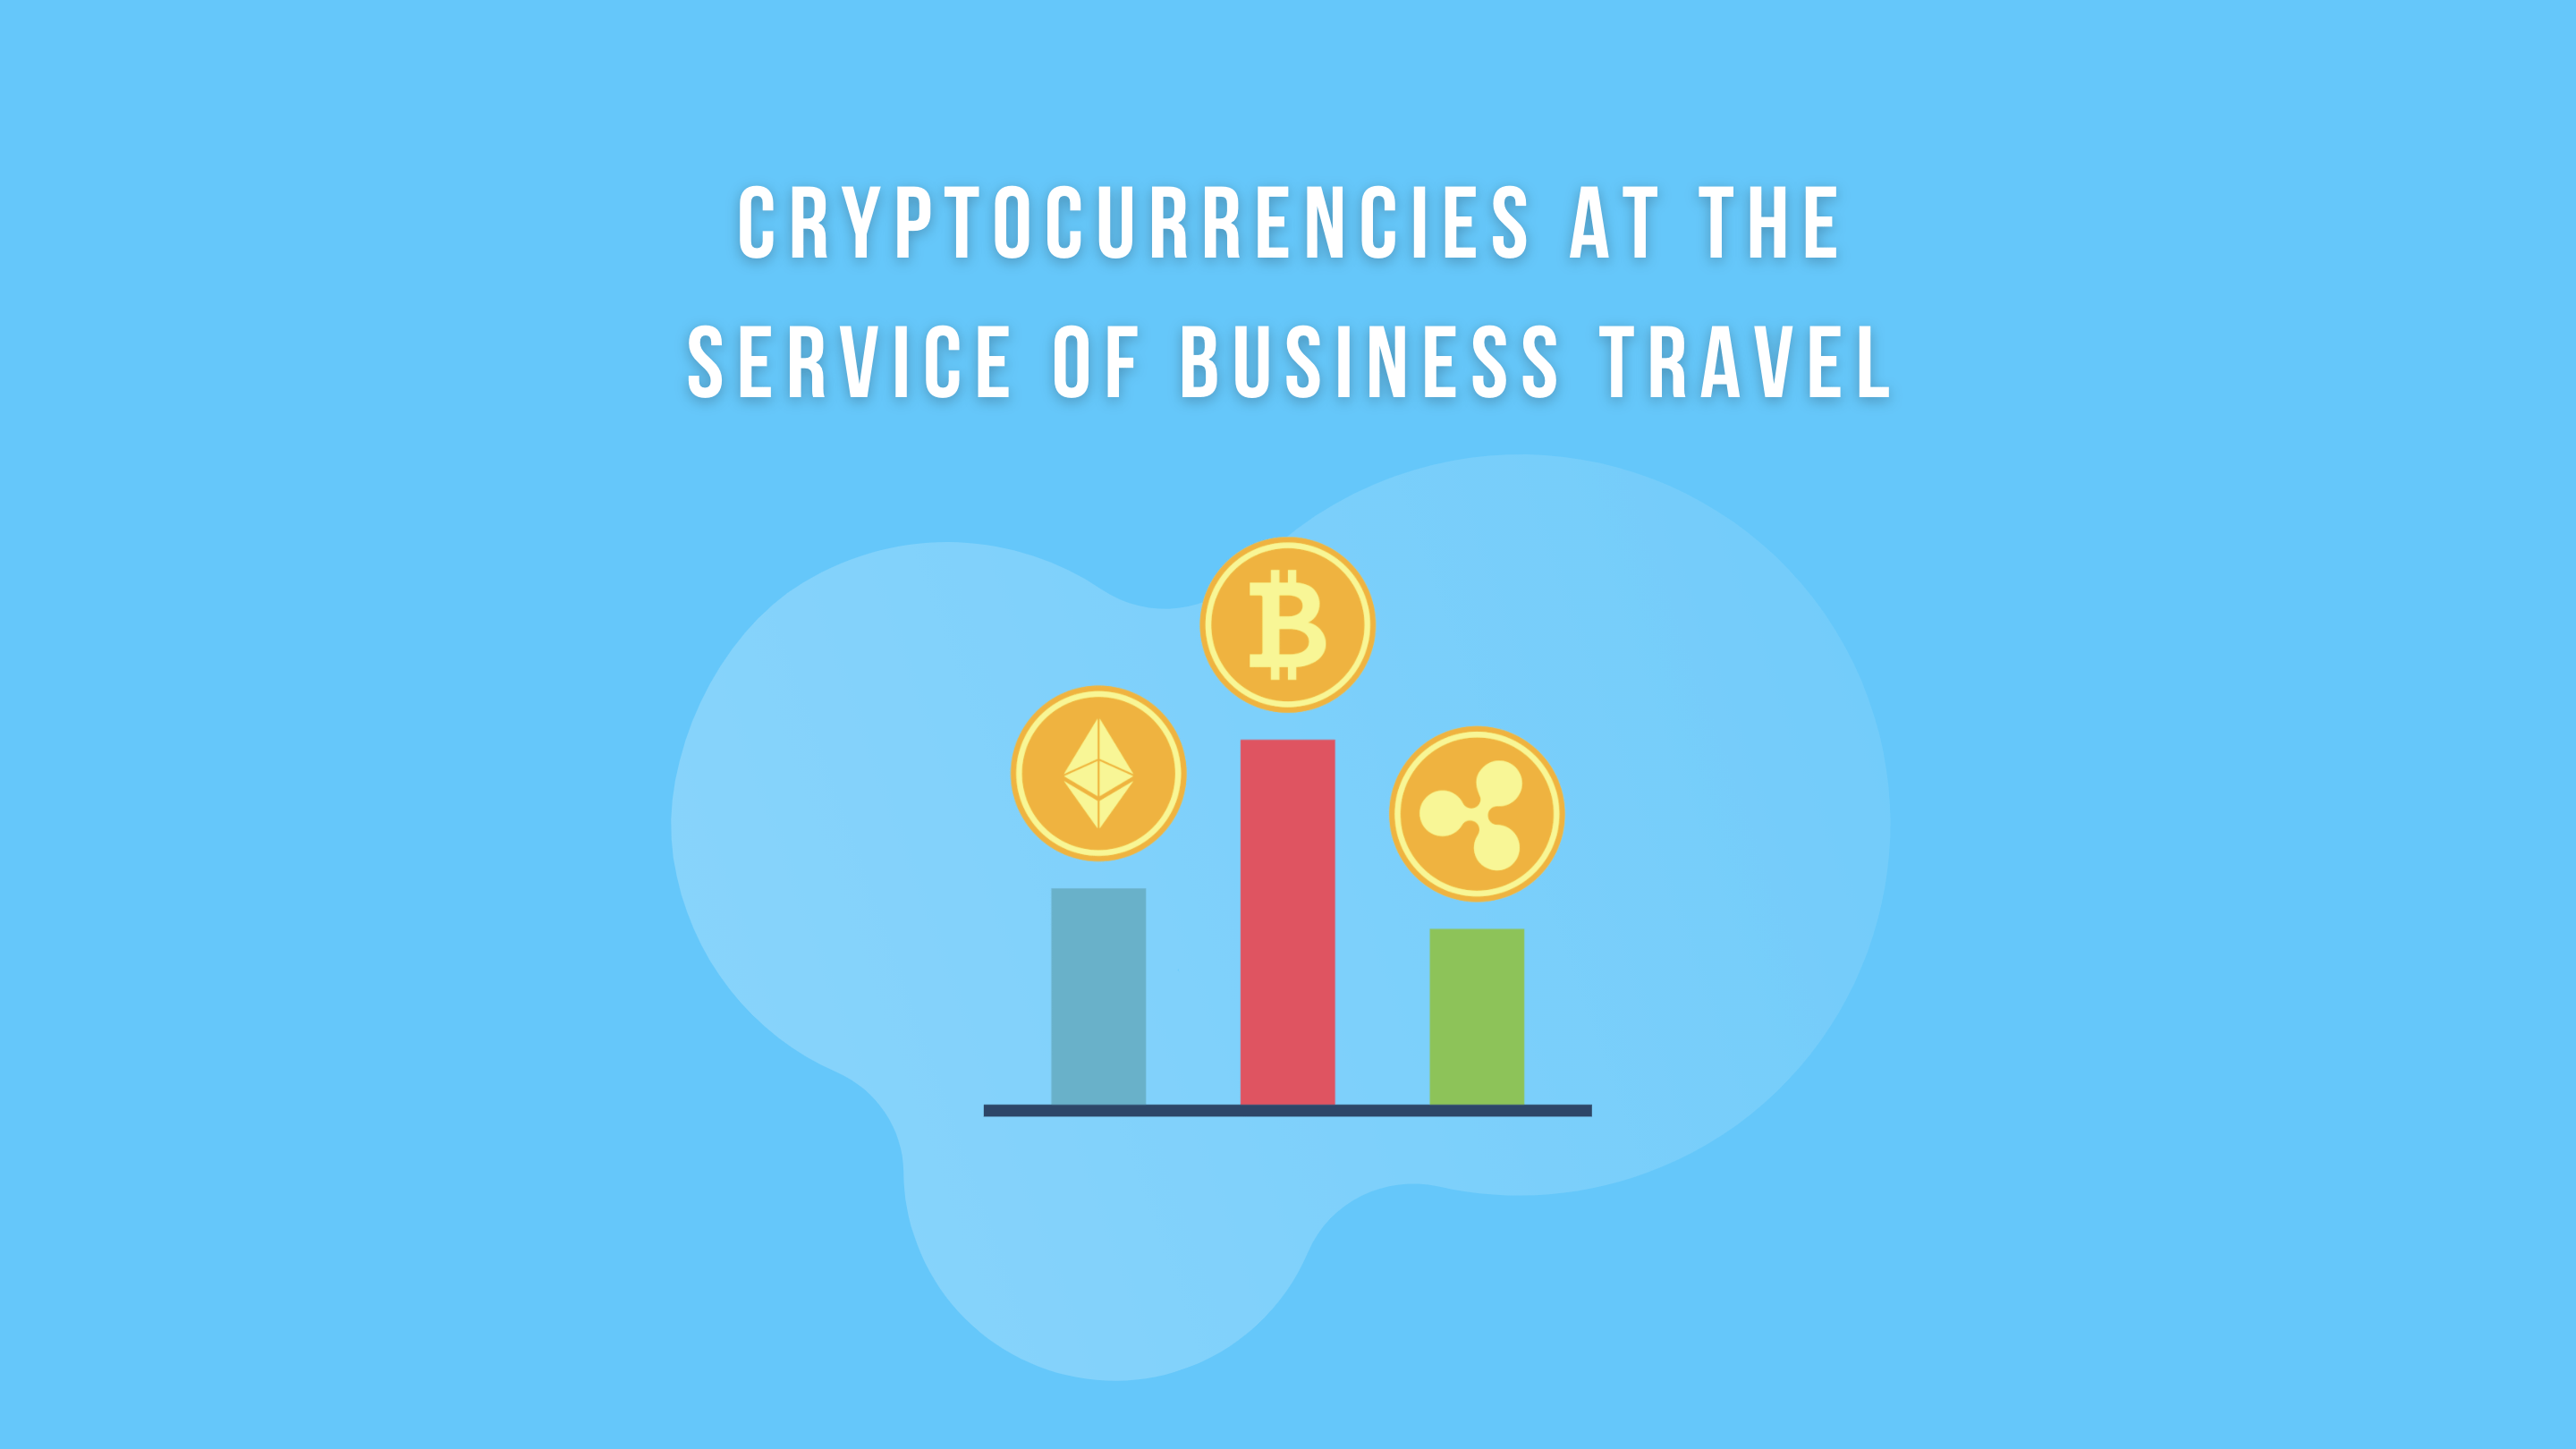 Travel business cryptocurrencies crypto Etherum Bitcoin Ripple